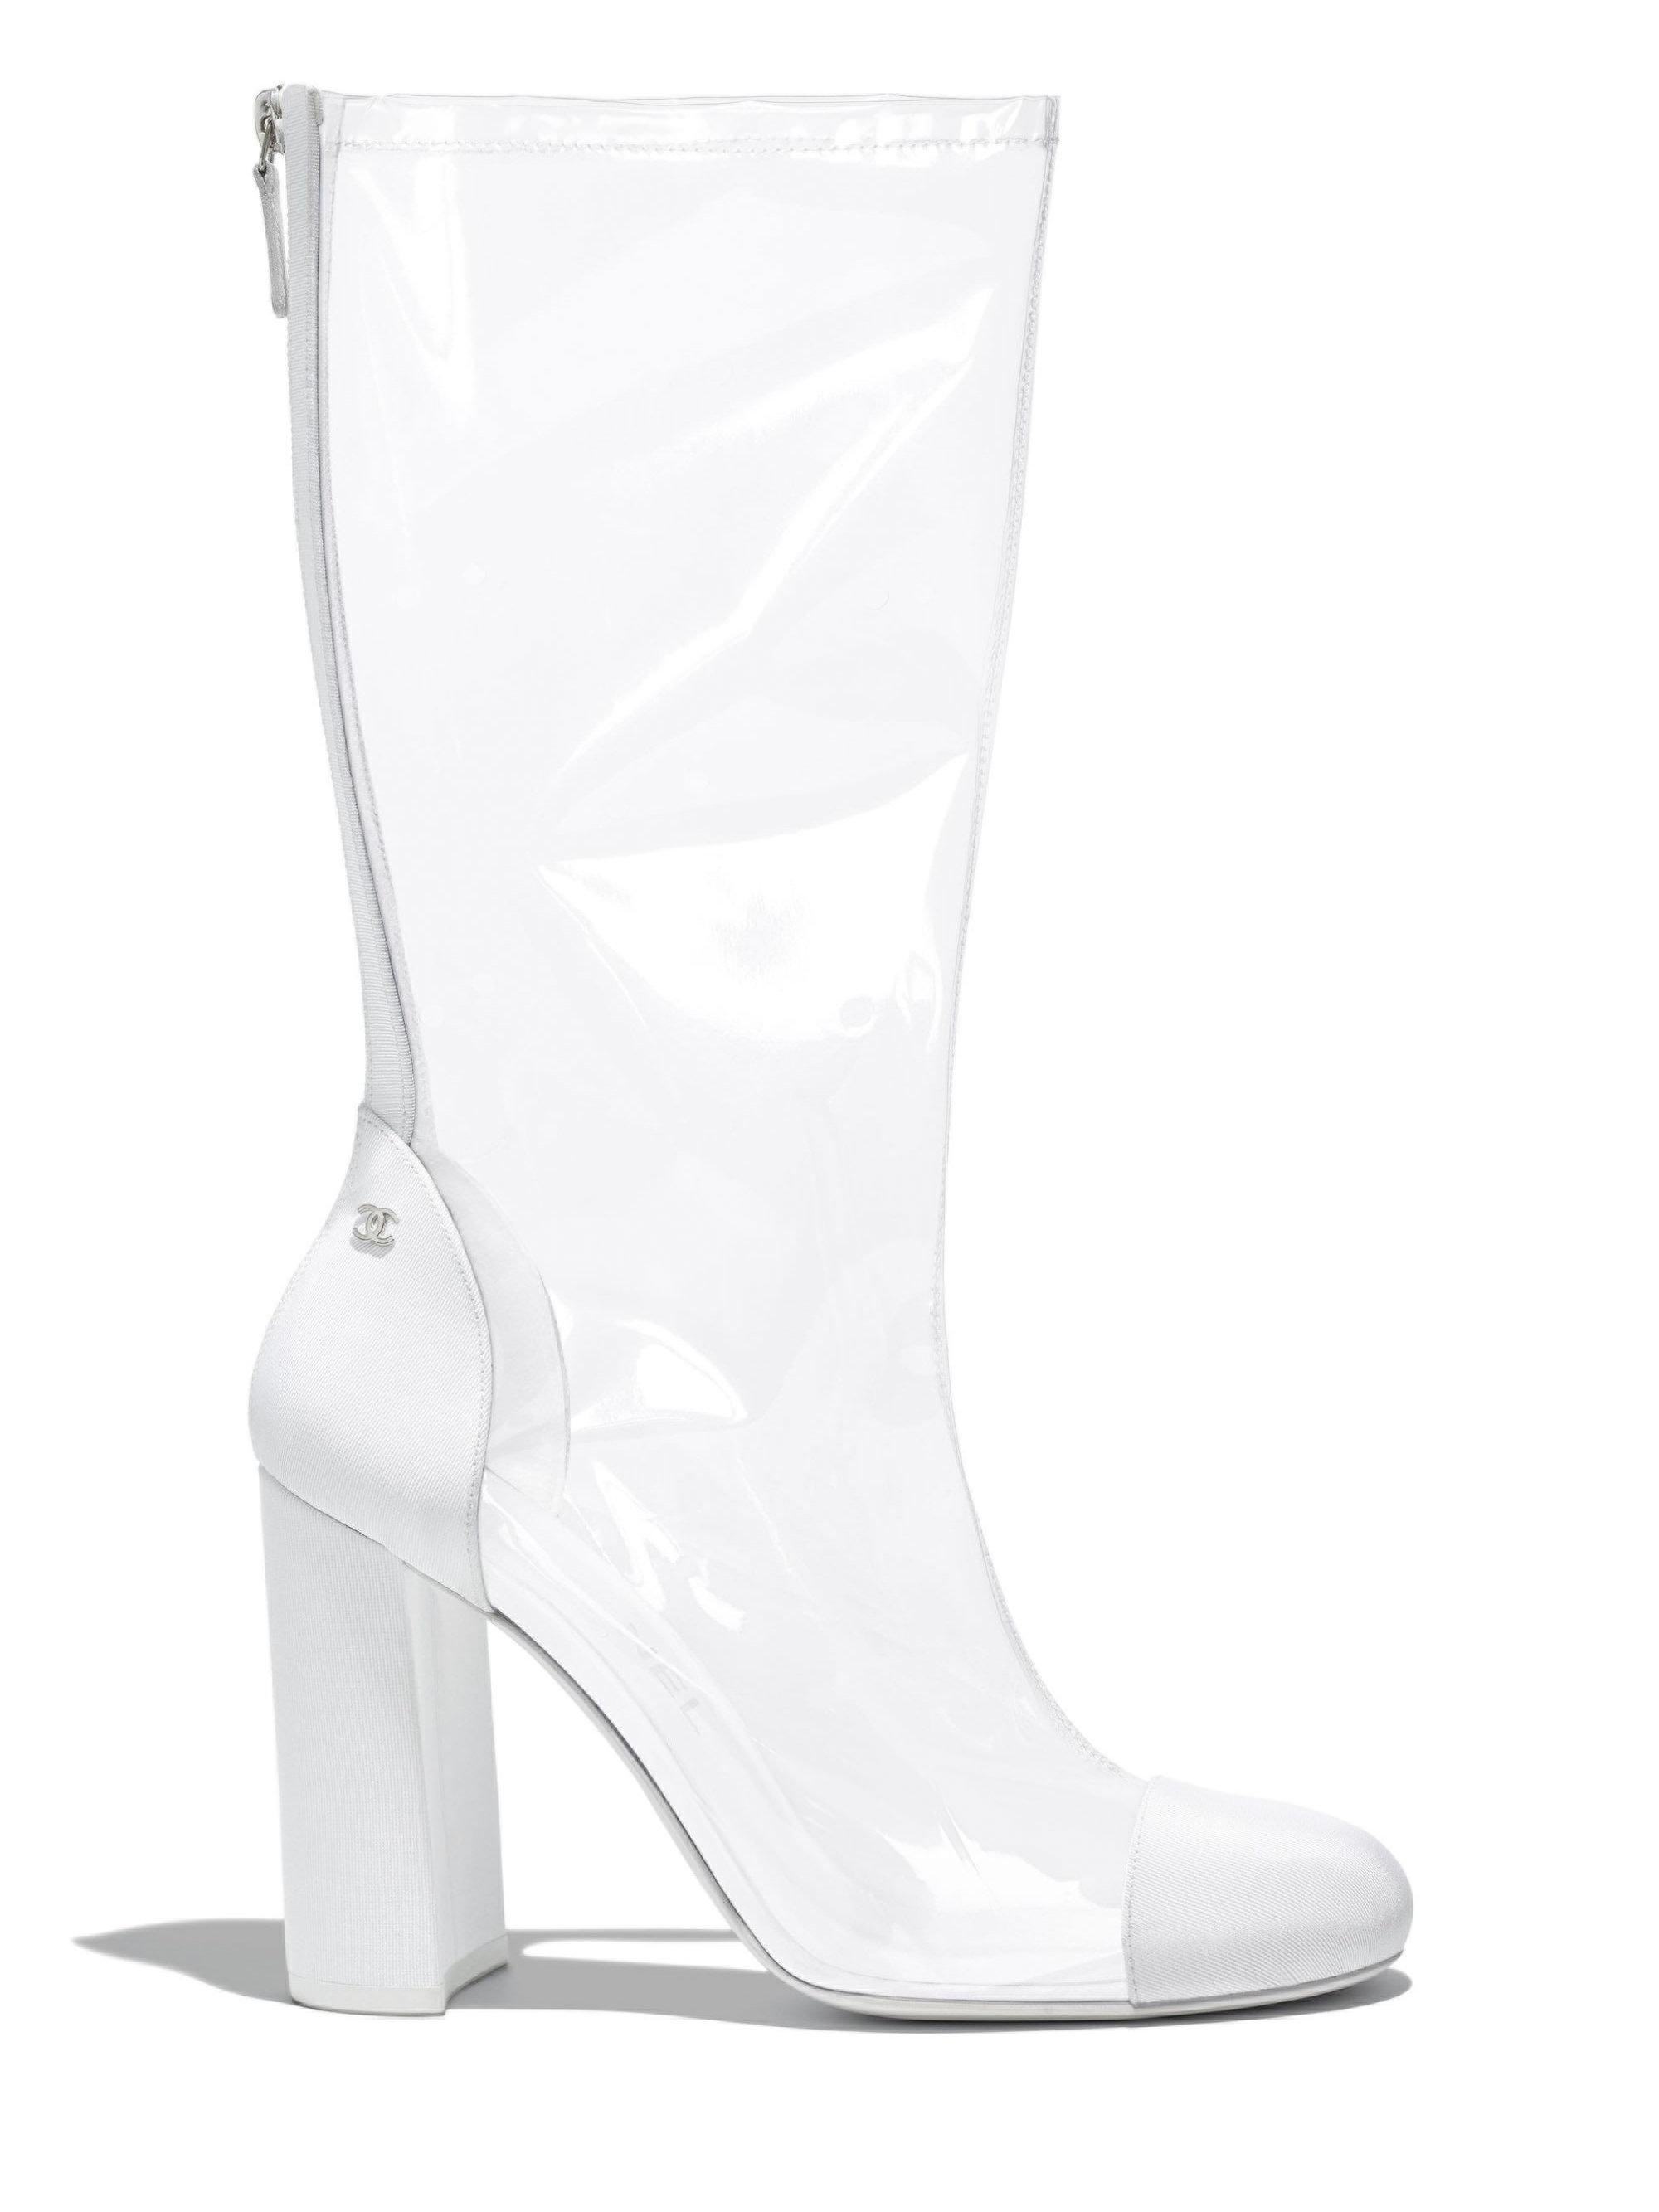 Chanel White Ankle Boots Block Heel CC Cap Toe BNIB 385 1350  eBay